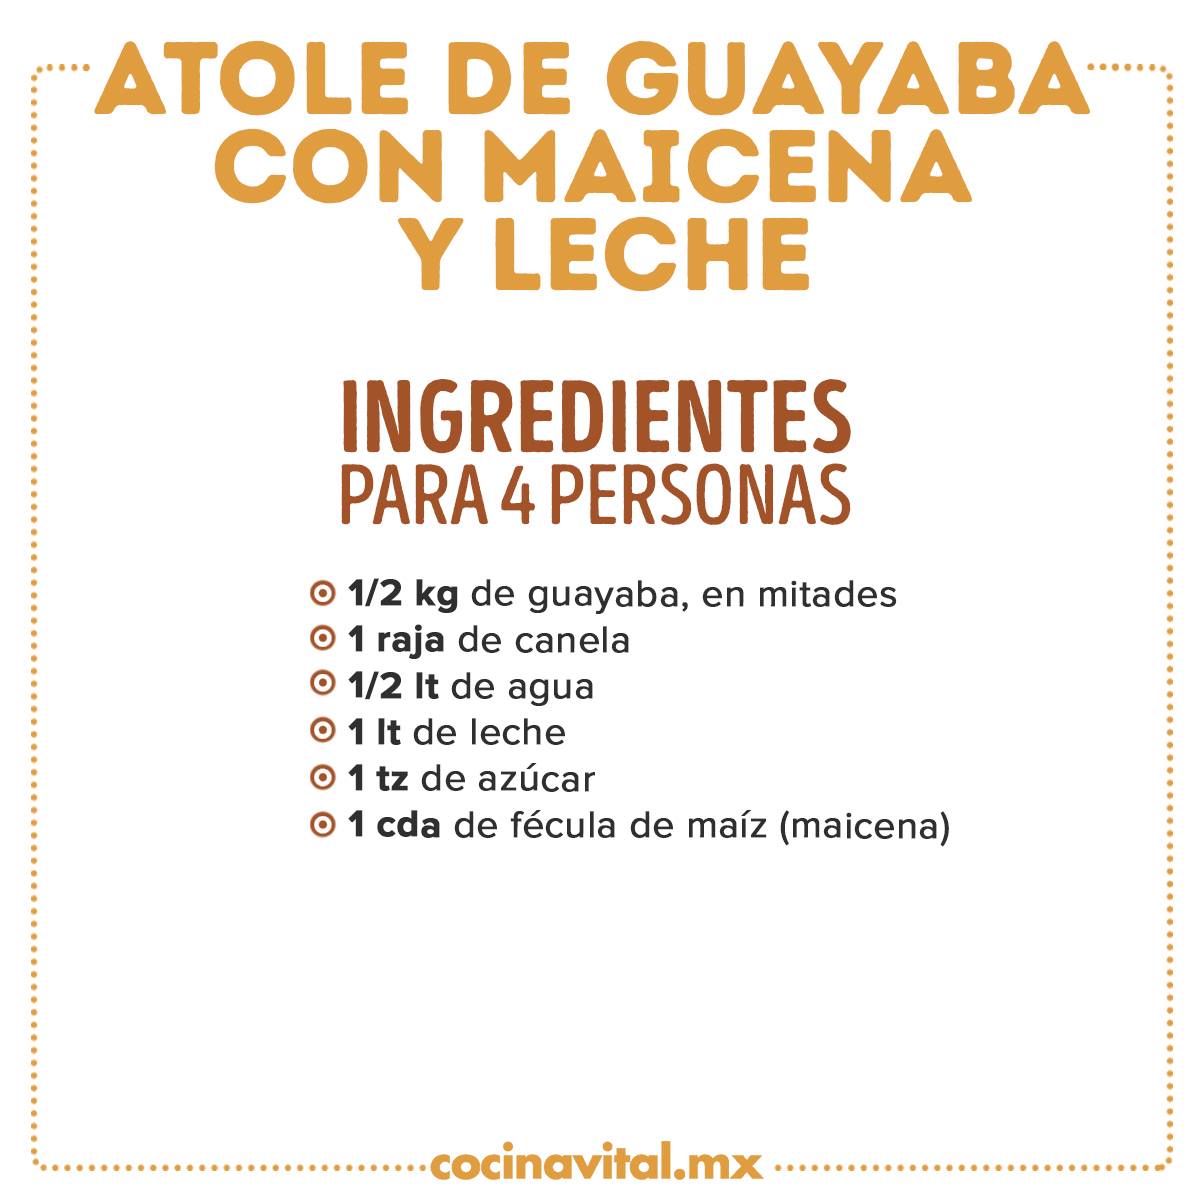 Ingredientes Atole de guayaba